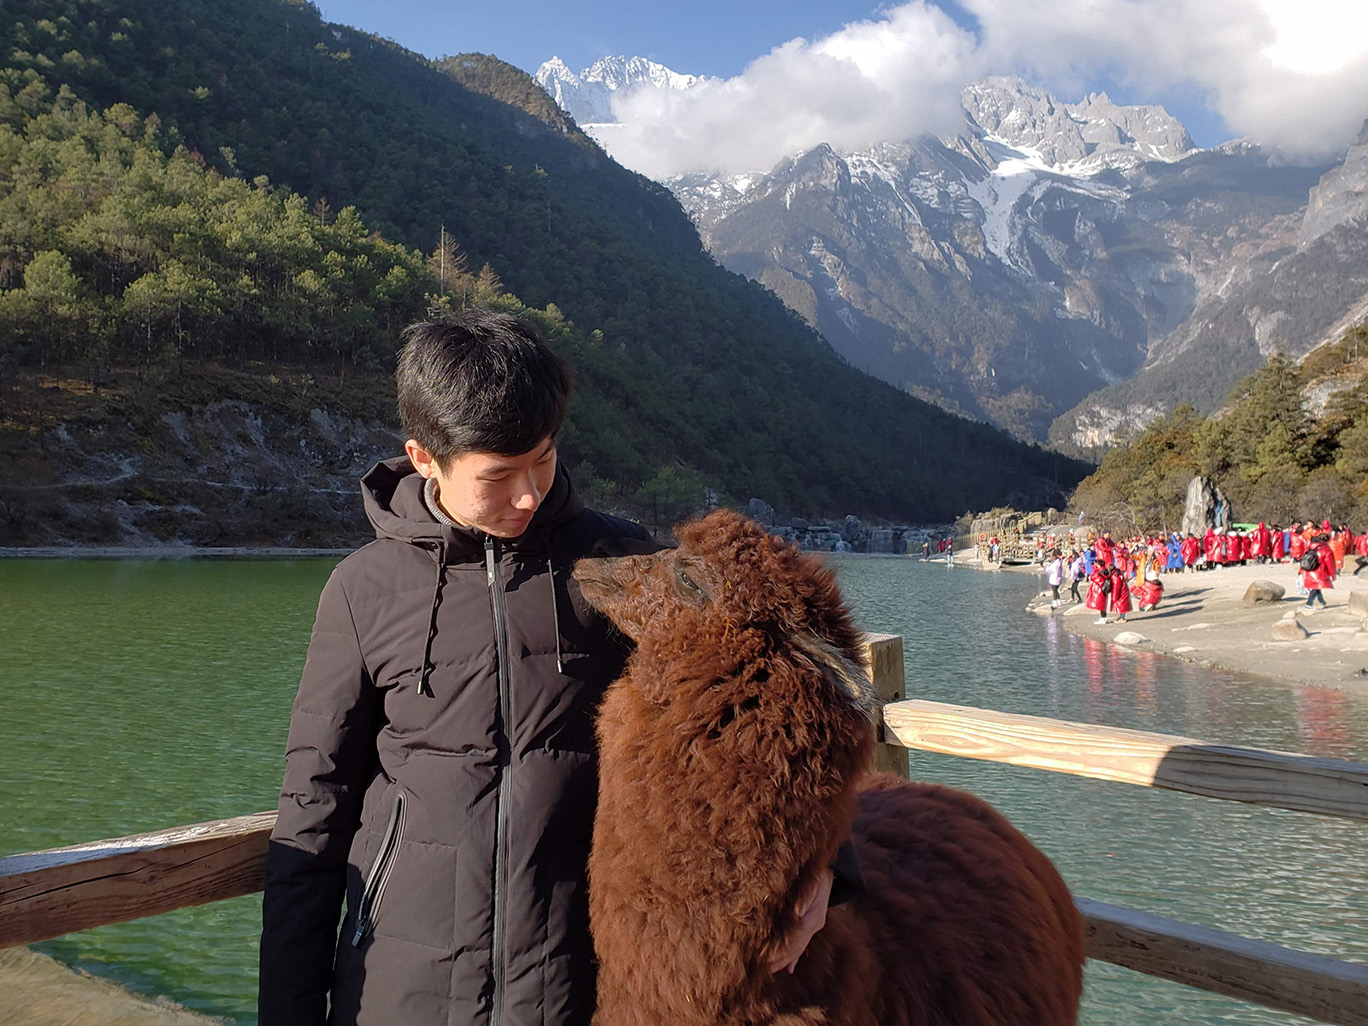 Yujia and the alpaca